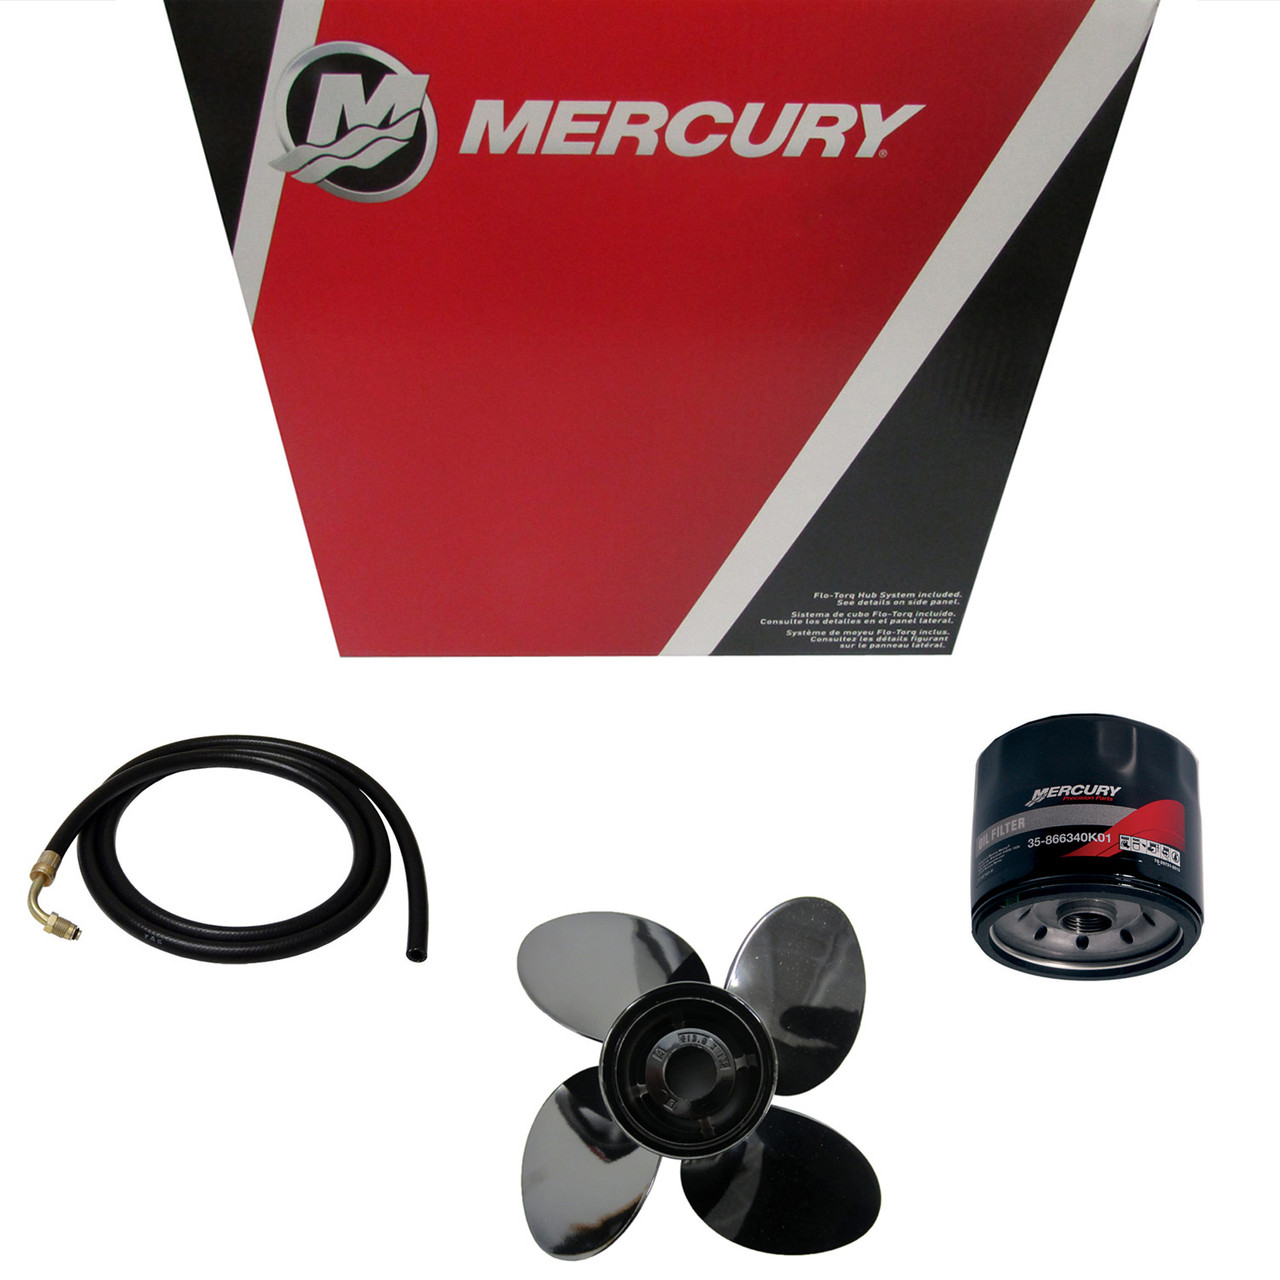 Mercury Marine / Mercruiser New OEM Ignition Coil, 803559A04